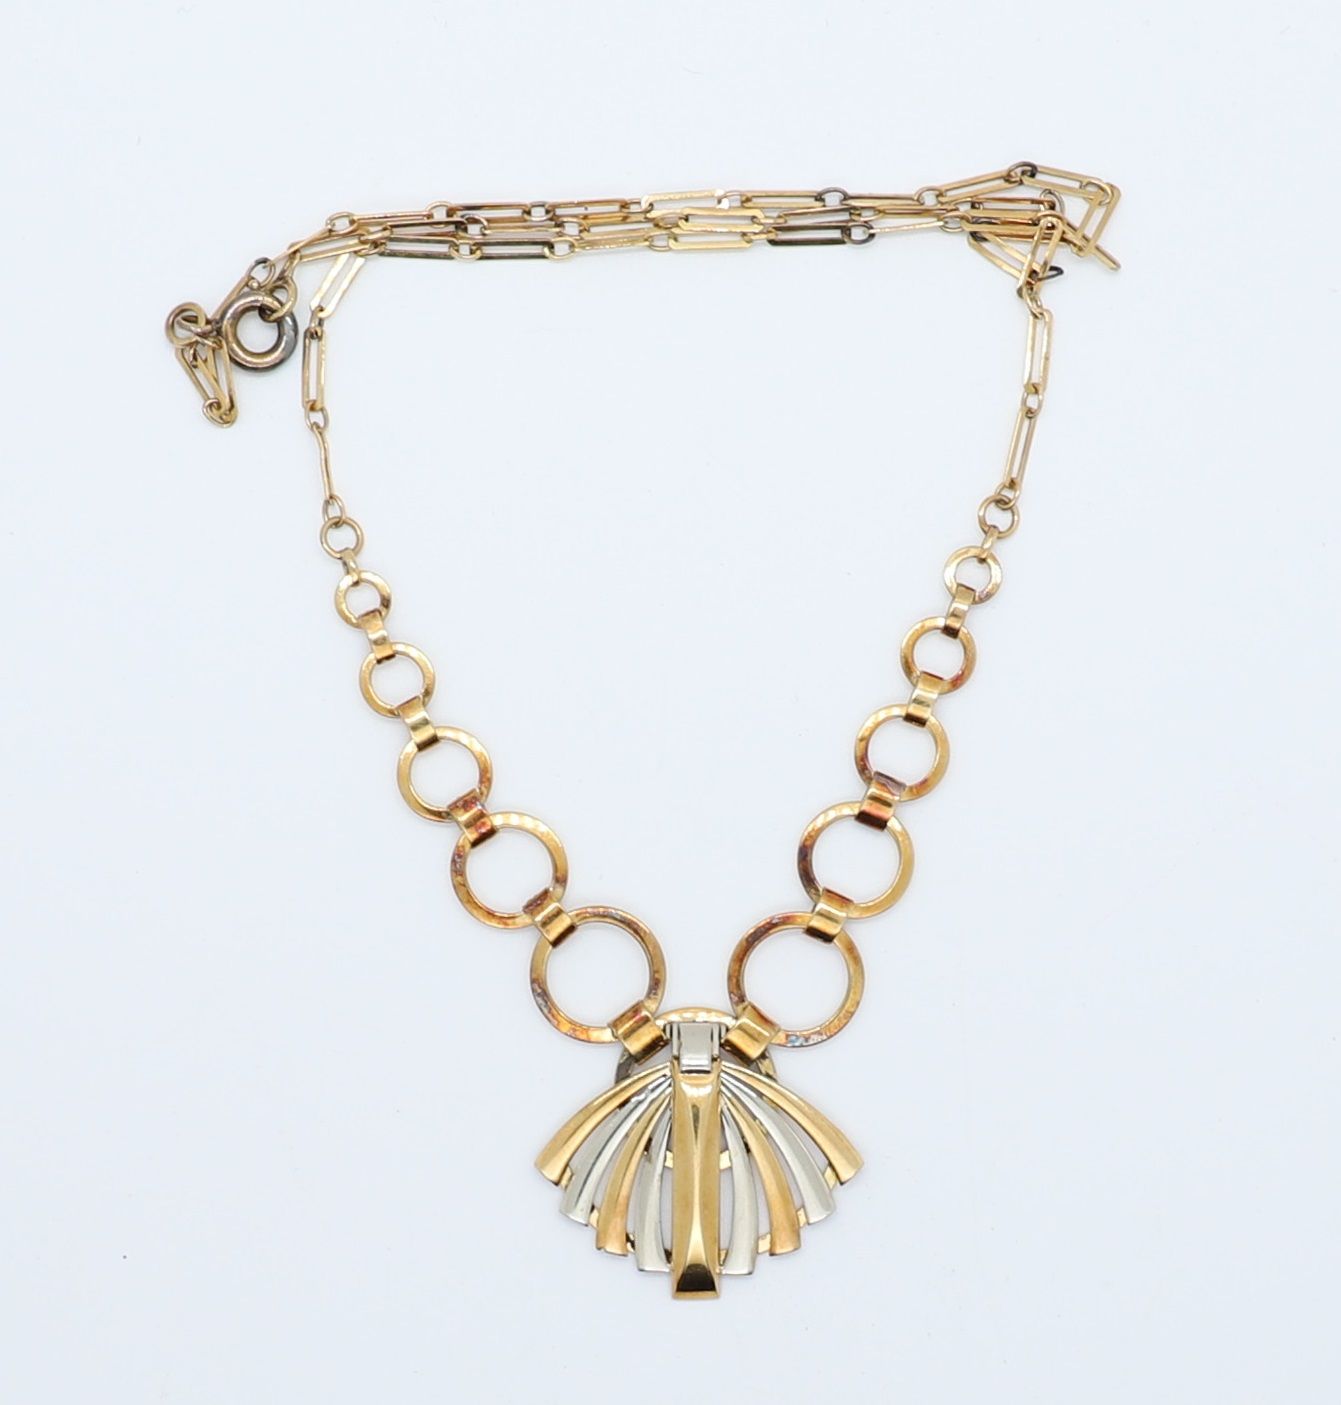 Null 黄金和白金 "à la palme "项链
标有鹰头图案
长：42厘米
重量：7.2克